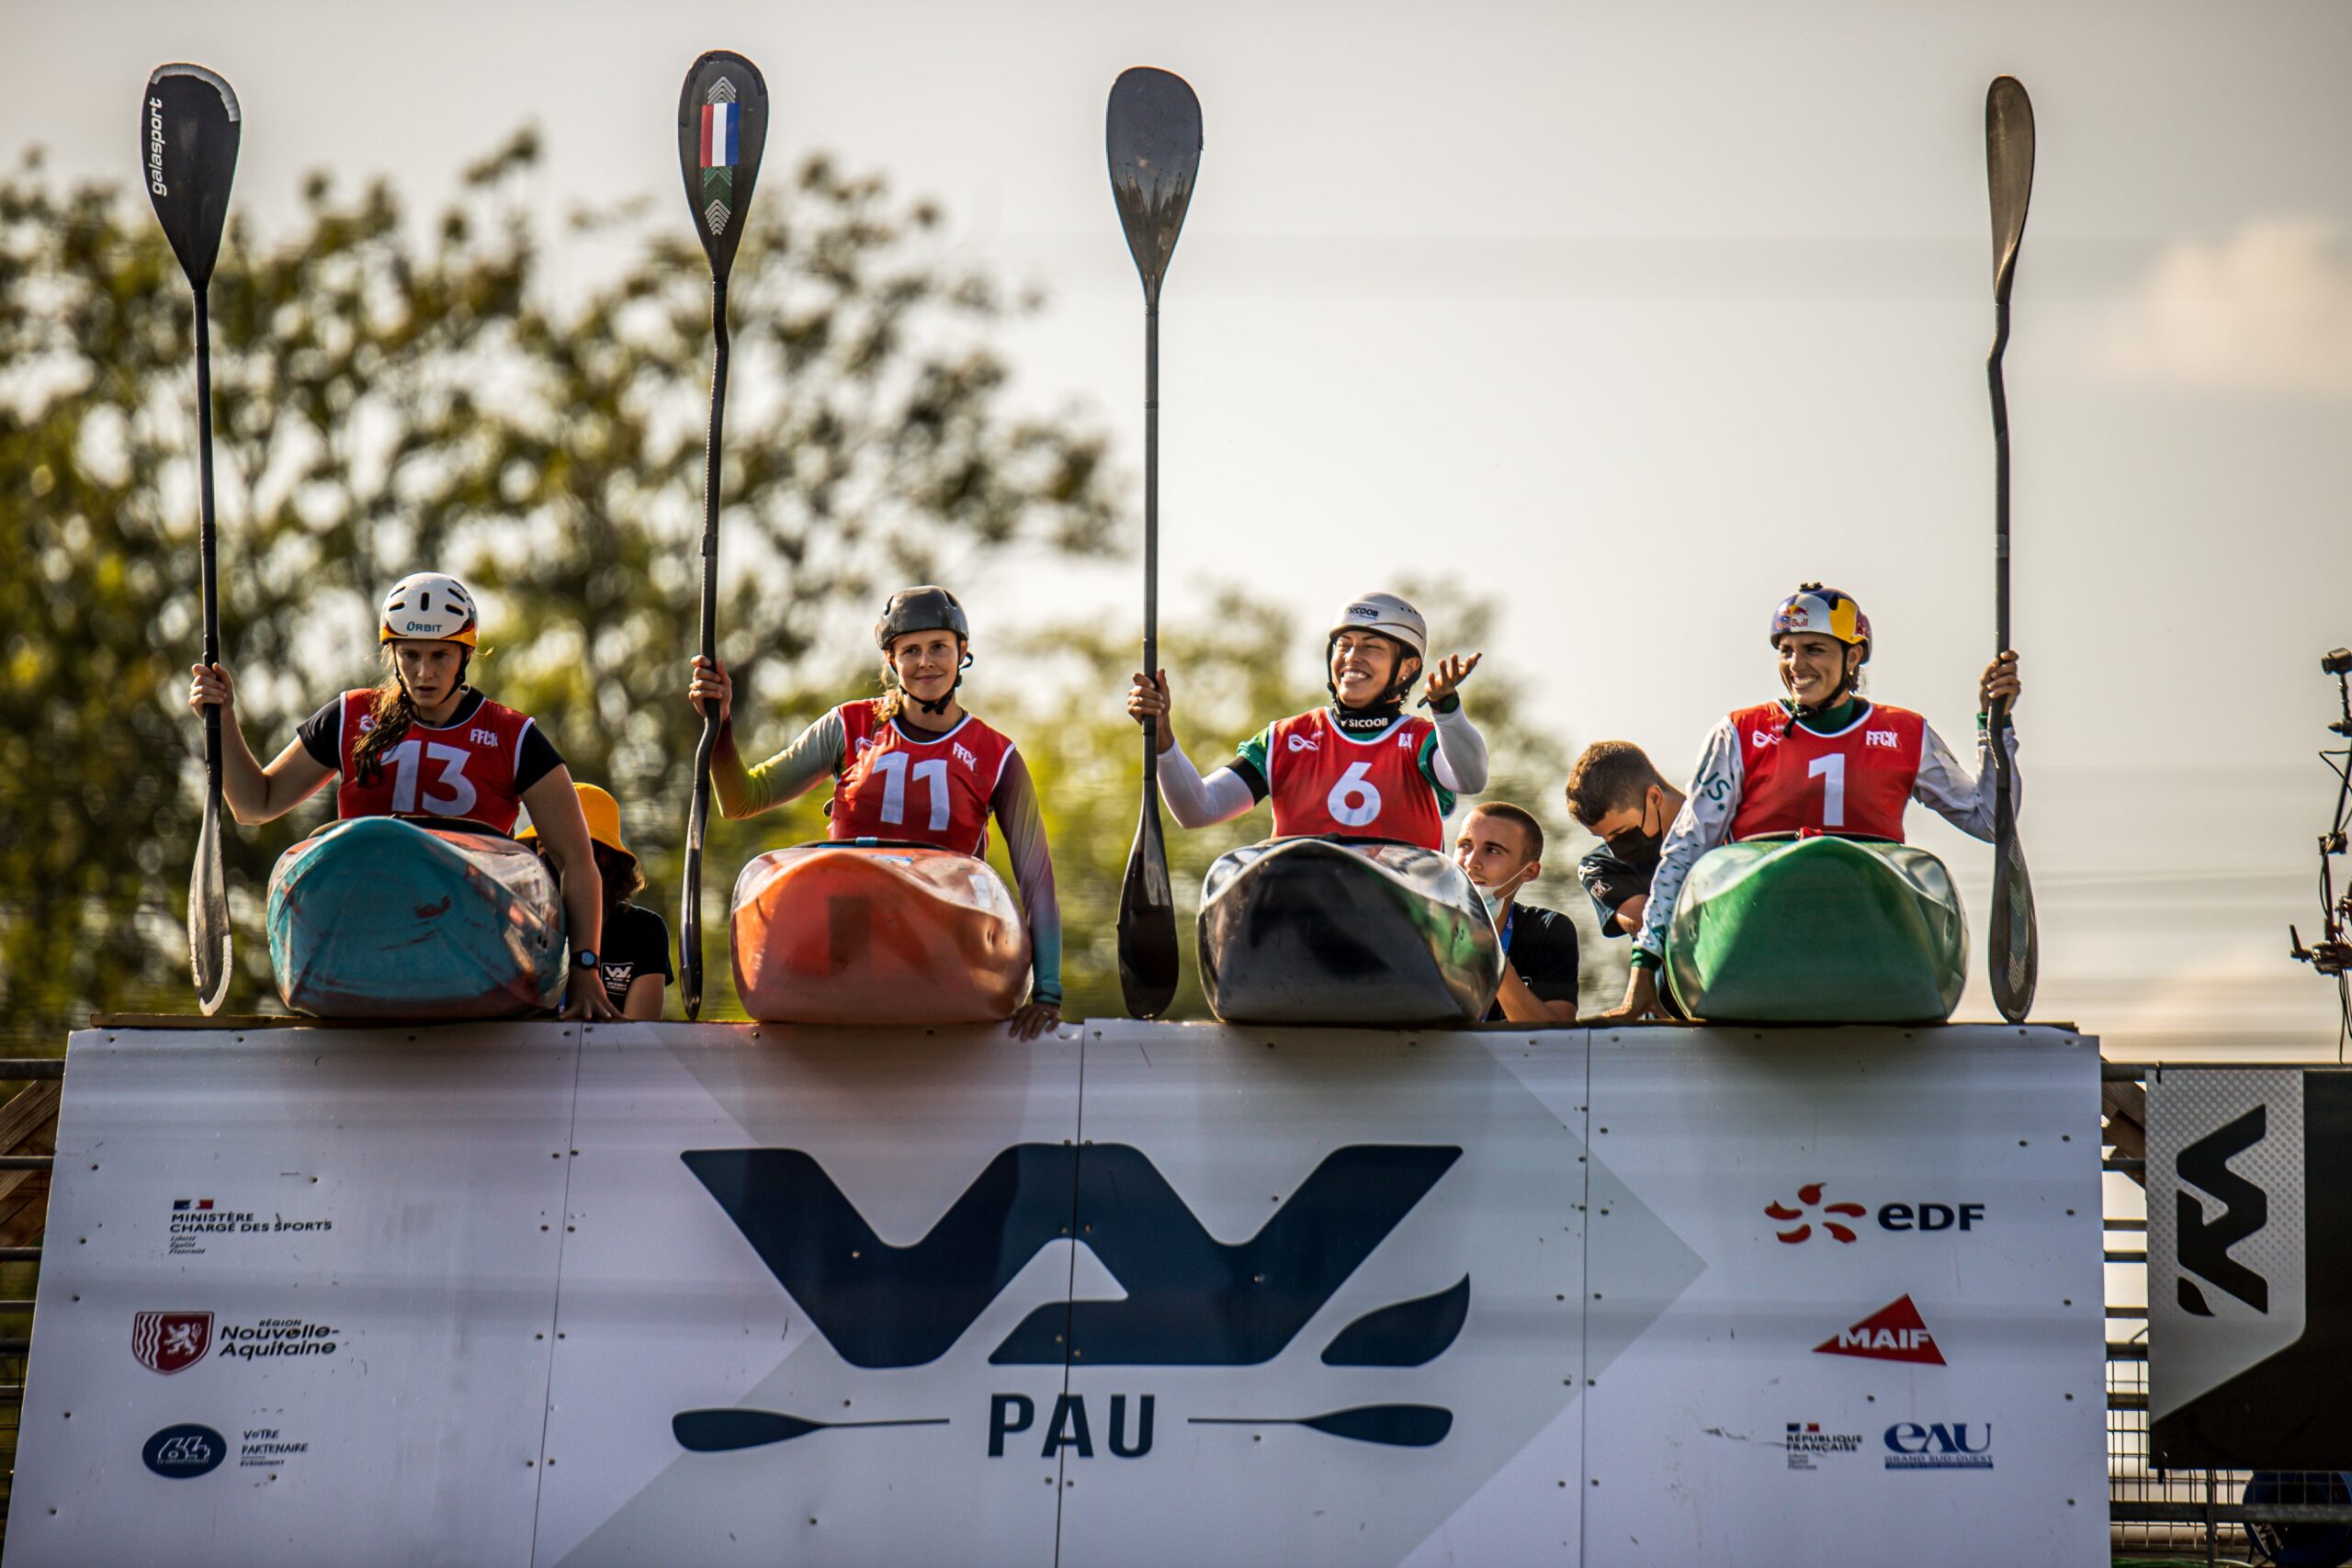 Coupe du Monde 2021 slalom extreme pau canoe kayak évenements